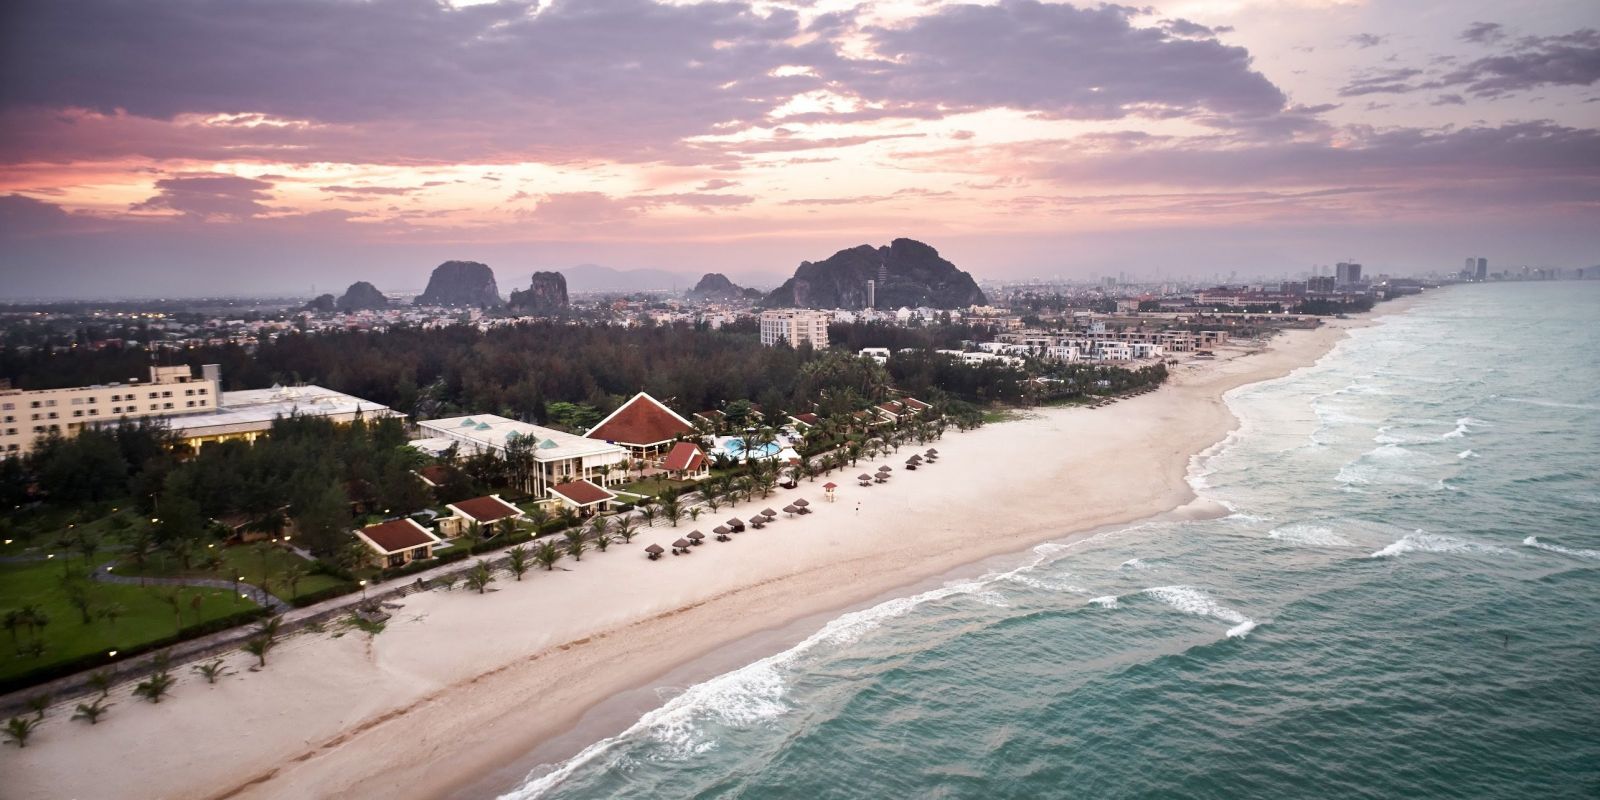 Centara already is represented in Vietnam by the Centara Sandy Beach Resort Danang. Source: Centara Hotels & Resorts.